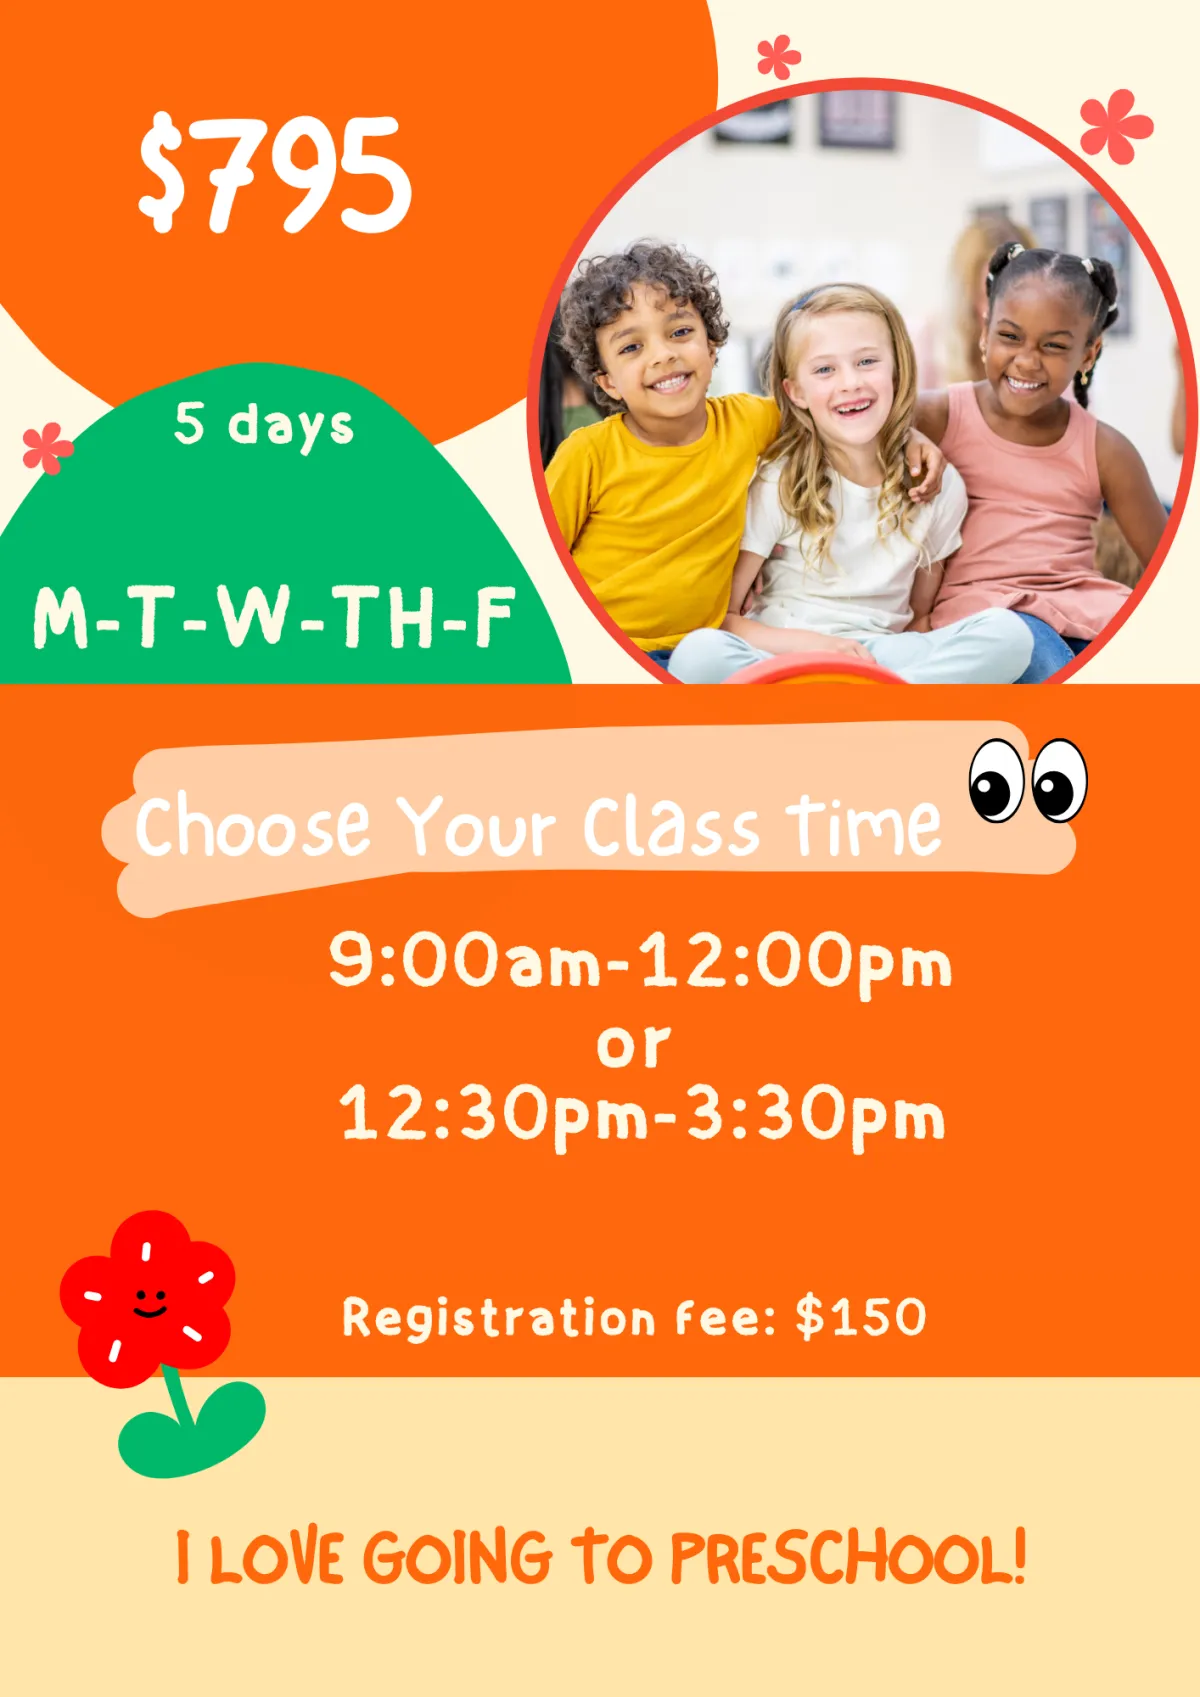 3 days preschool class price